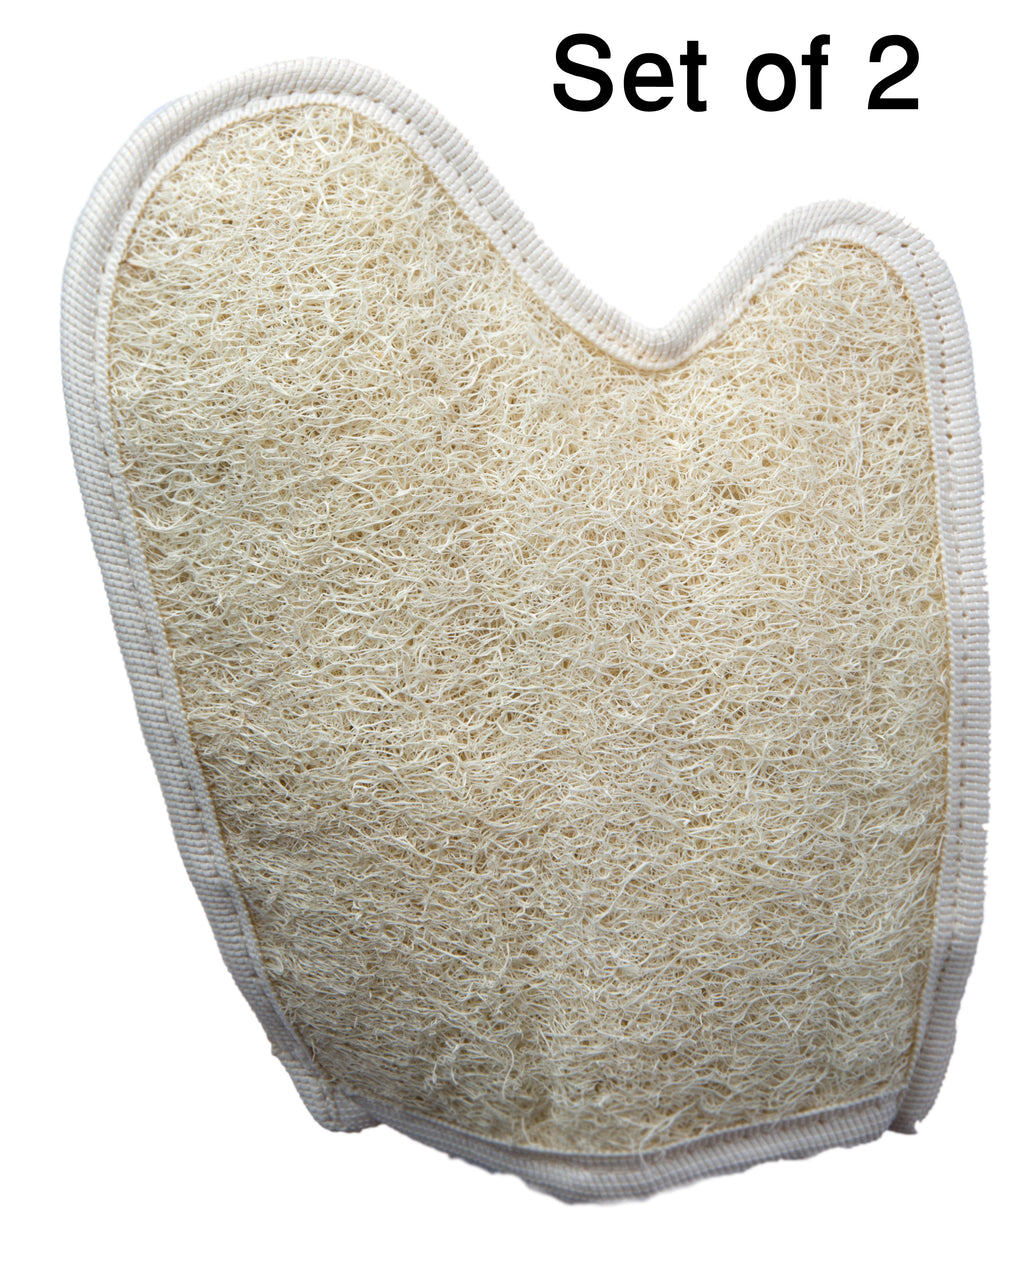 Exfoliating Loofah Glove / Pad - 2 Pack 100% Natural SPA Beauty - Egyptian Organic Bath Sponge Body Scrubber - Premium Quality Lofa Loofa Luffa